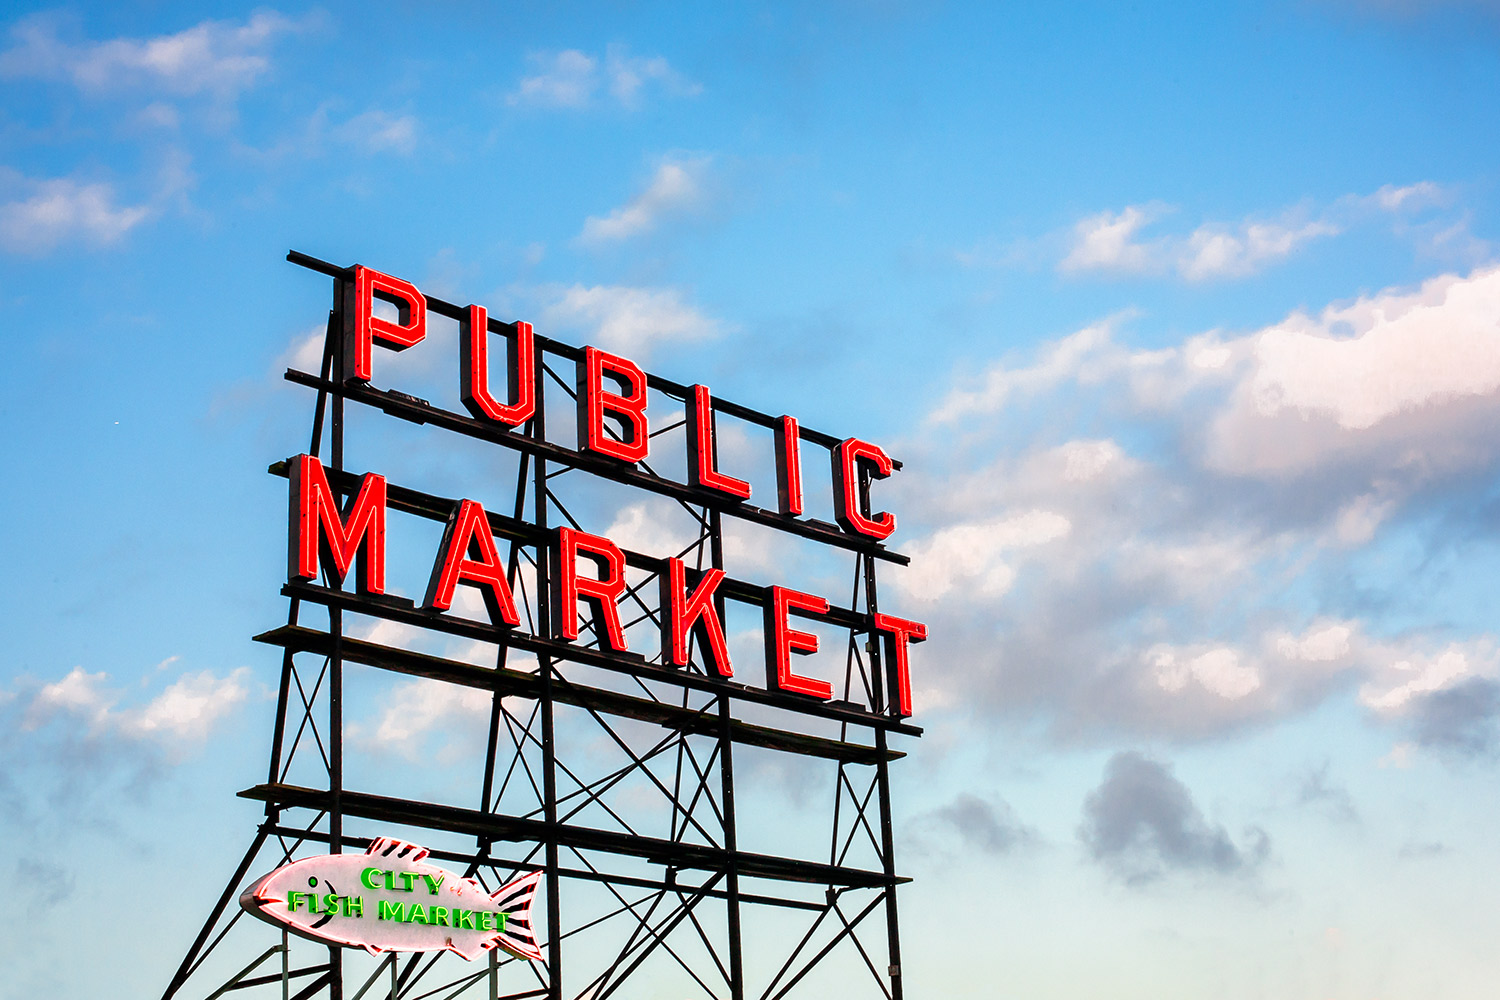 Public Market by Day